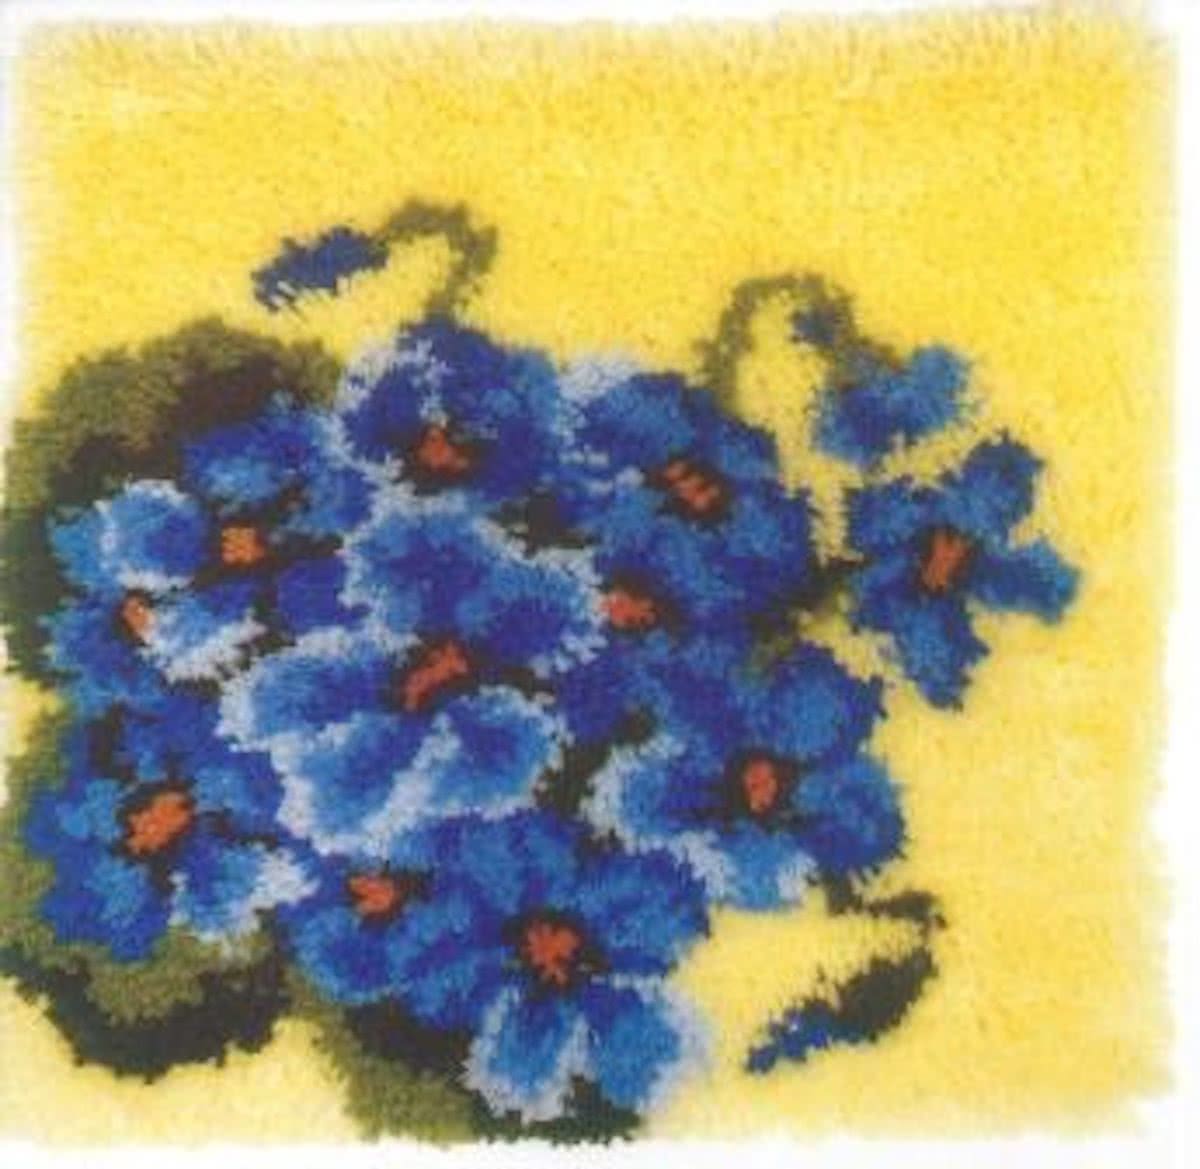 knoopkussen 99653 blauwe viooltjes op geel (incl. knoophaak)